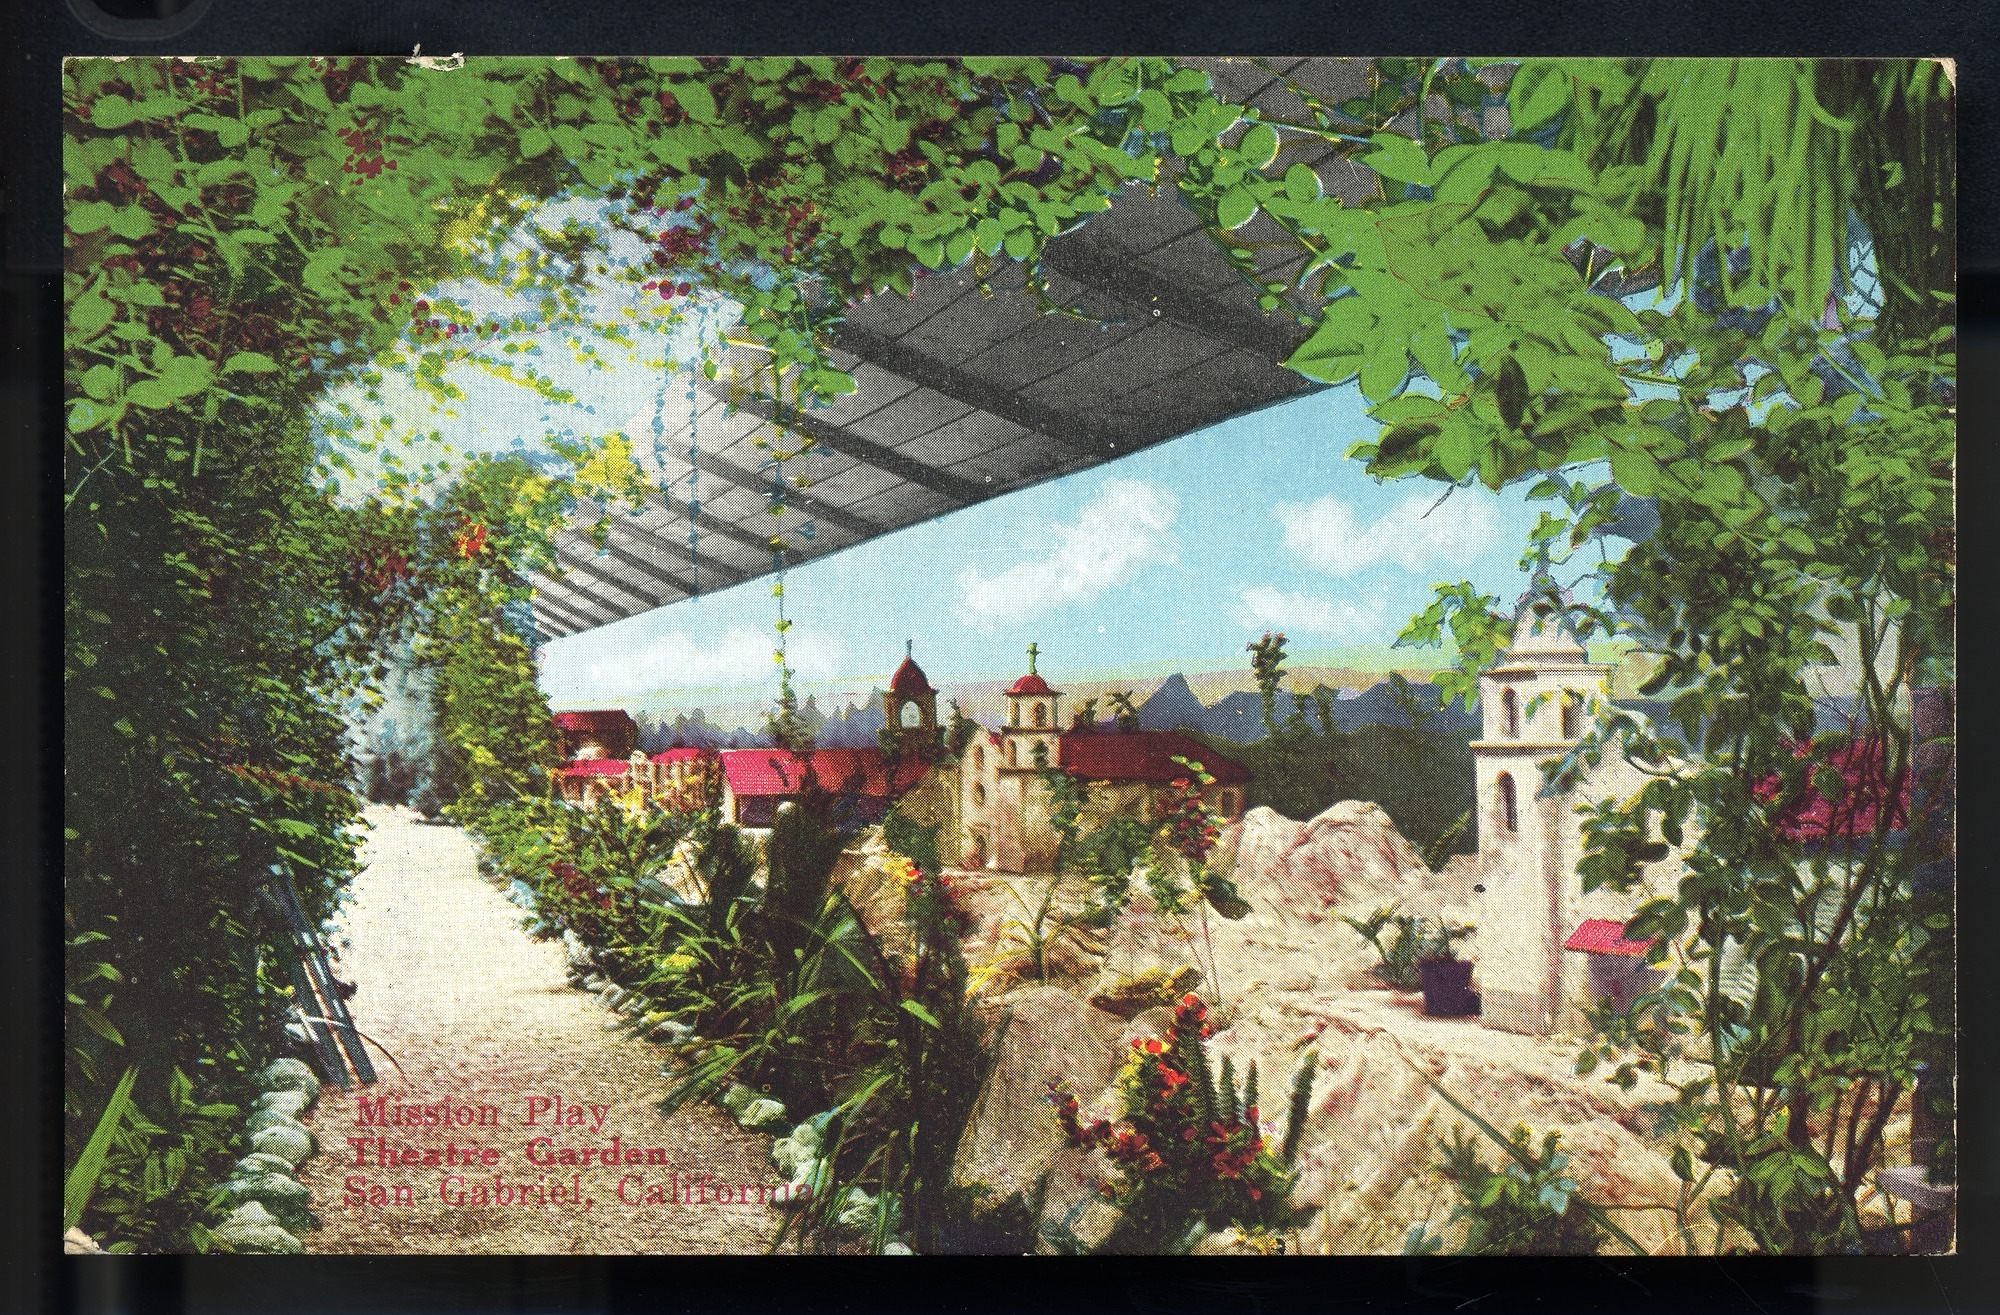 Postcard 16 – Mission Play Theatre Garden San Gabriel, California. Van Ornum Colorprint Company. M. Kashower Company. 1908-1921. NMAH 1986.0639.0504.